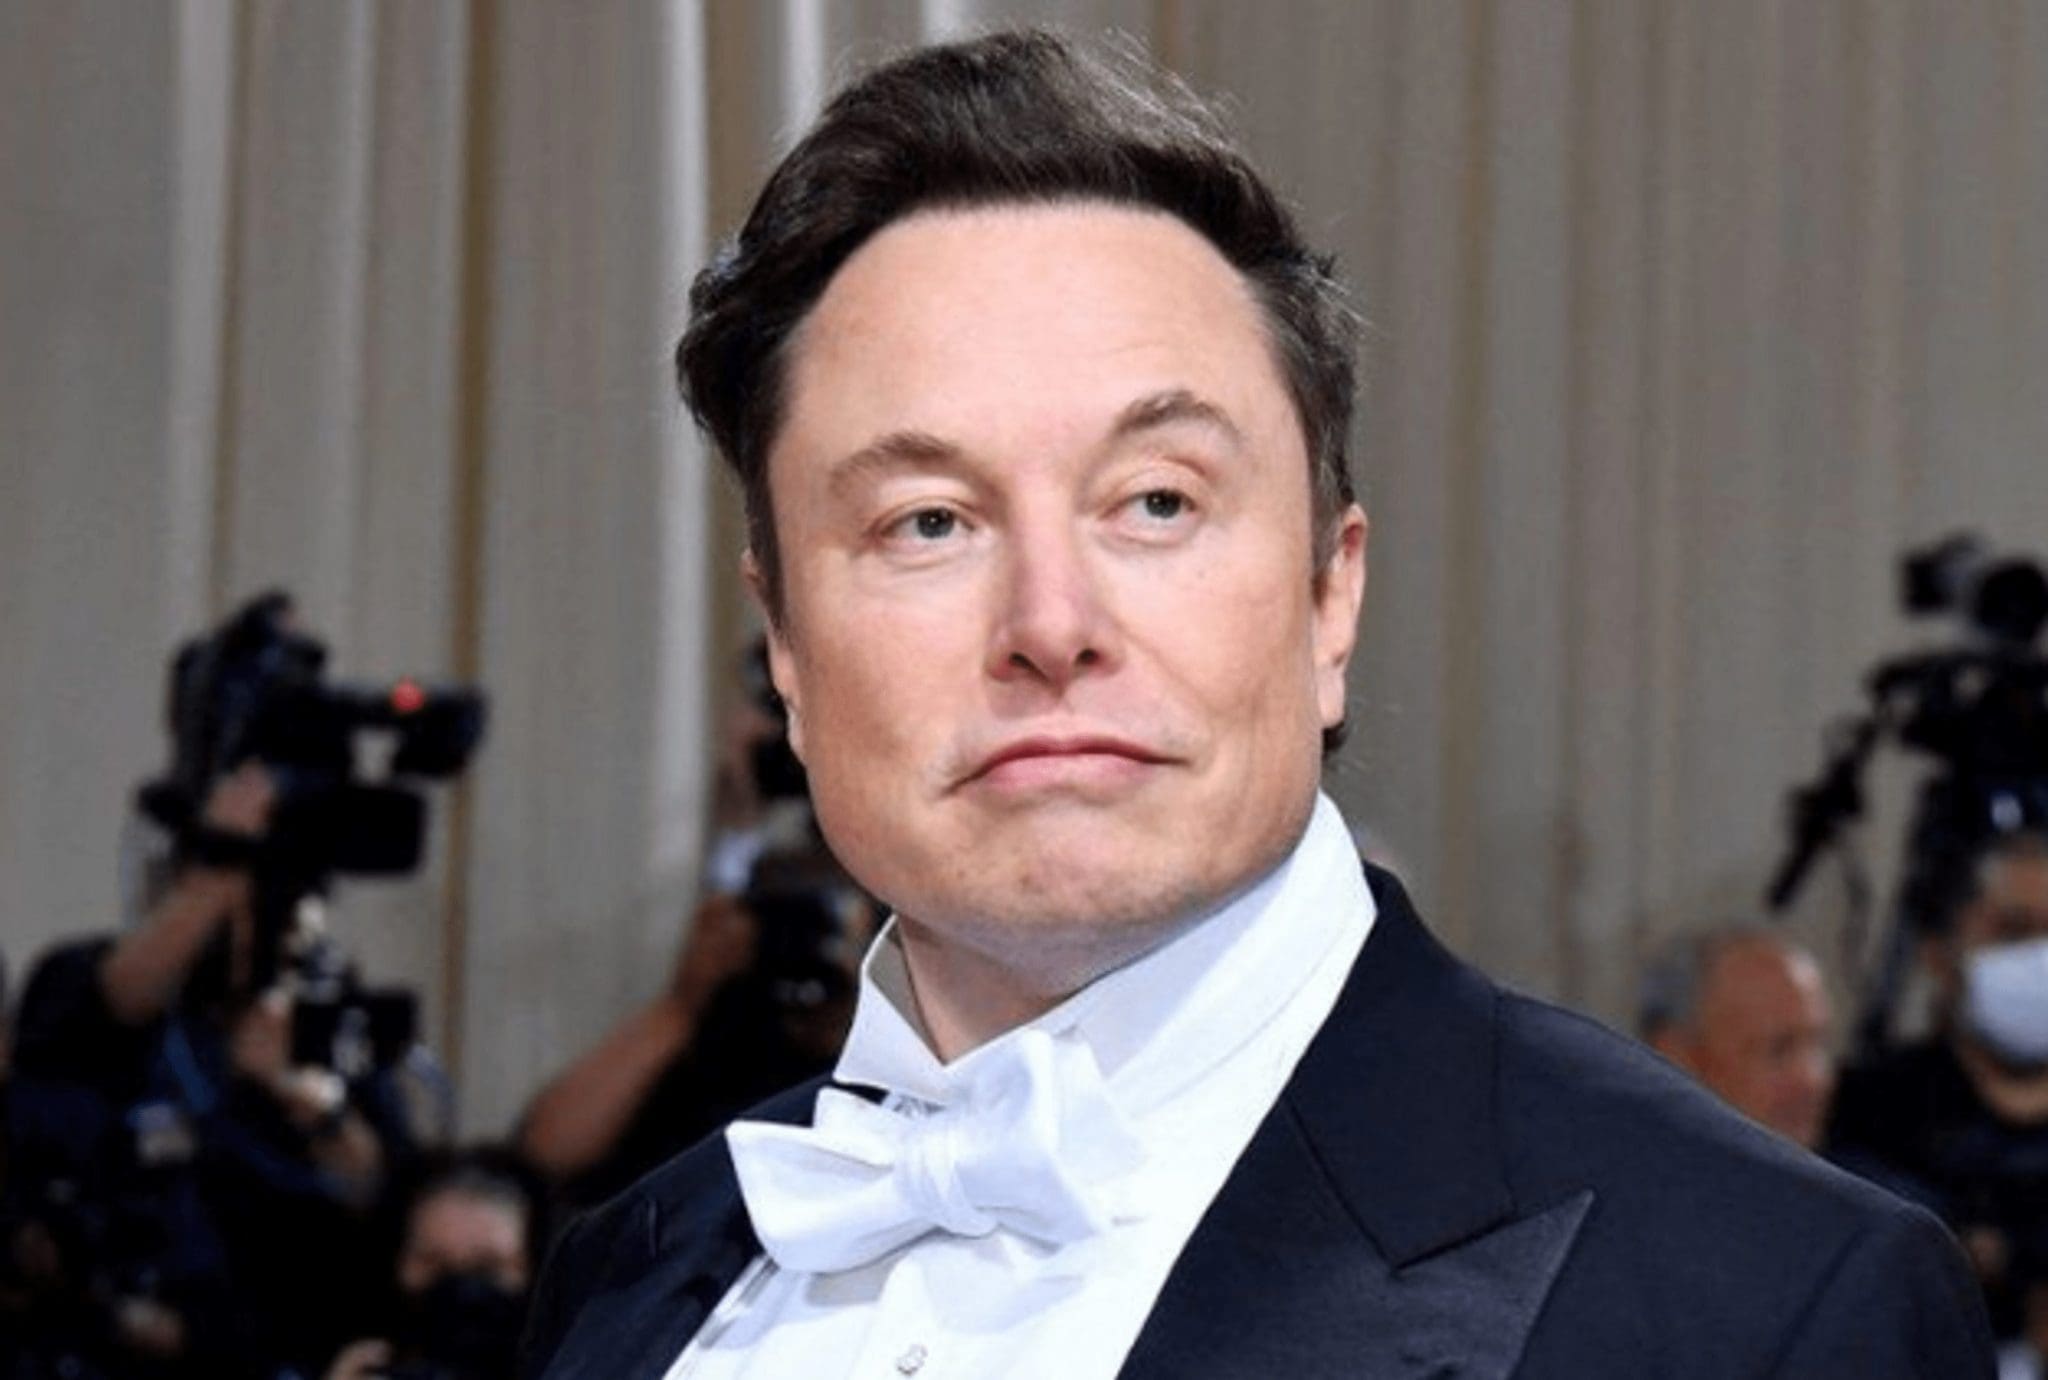 Twitter Representative Are Preparing To Sue Elon Musk